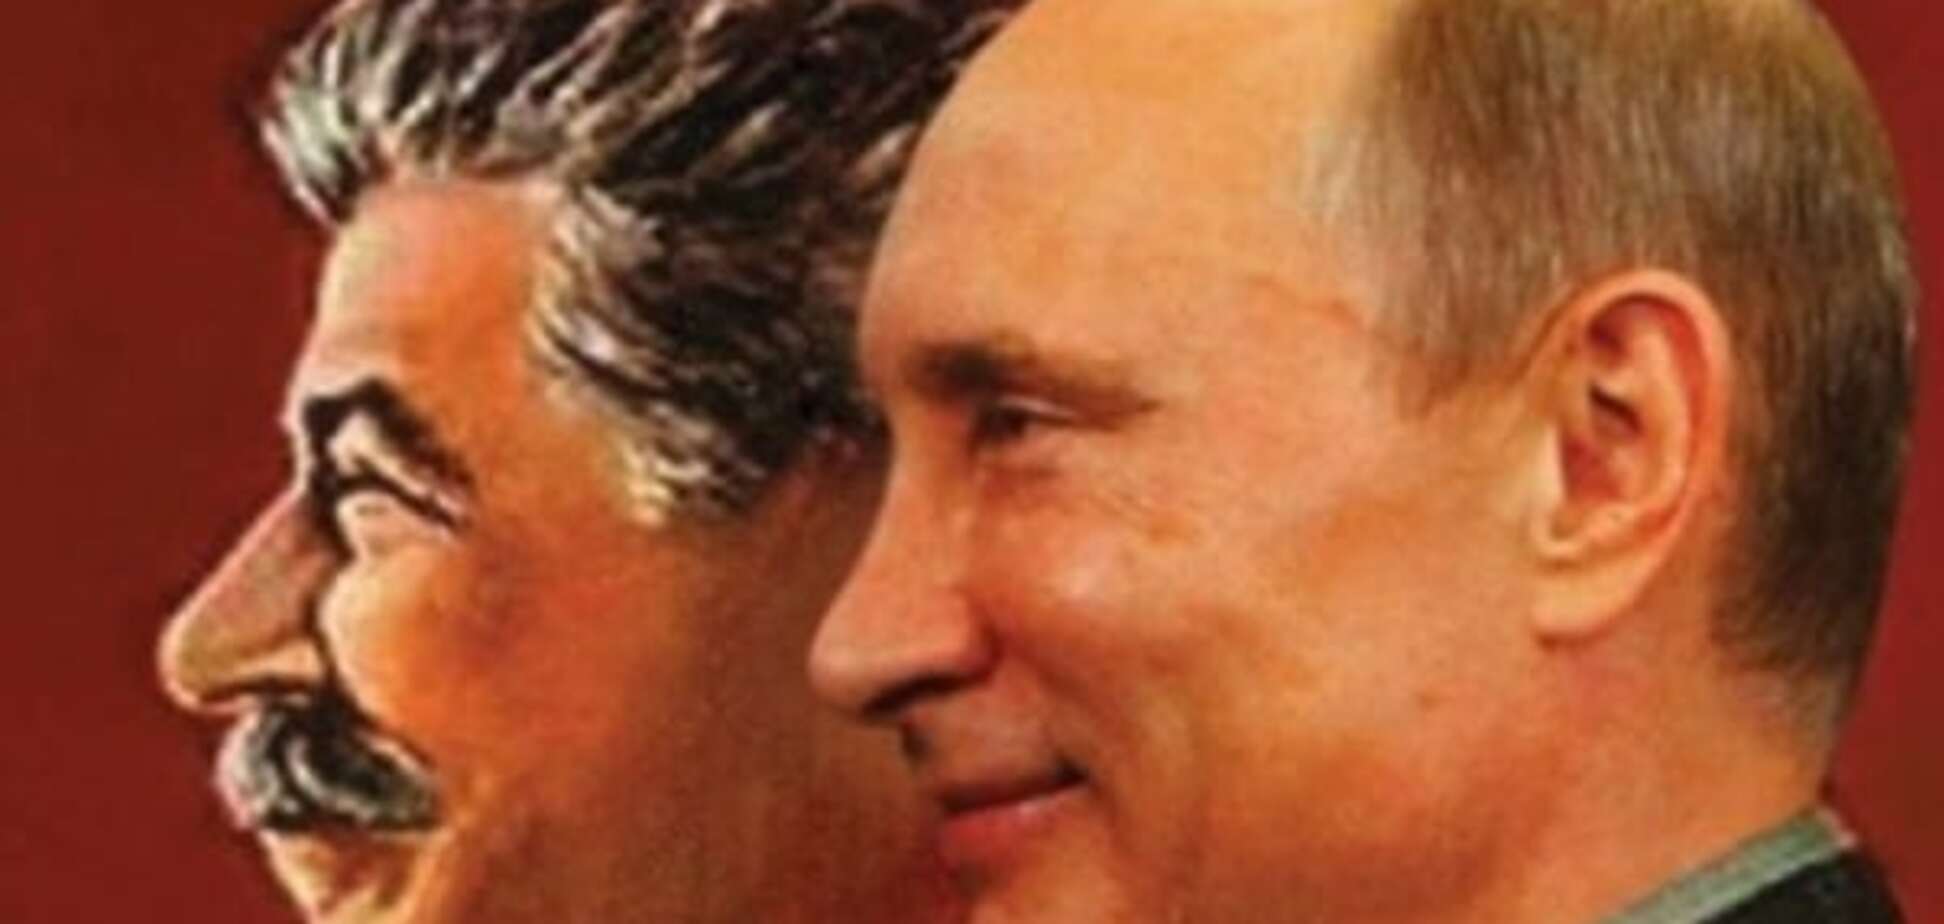 Портніков пояснив культ Сталіна і Путіна рабською 'селекцією' росіян